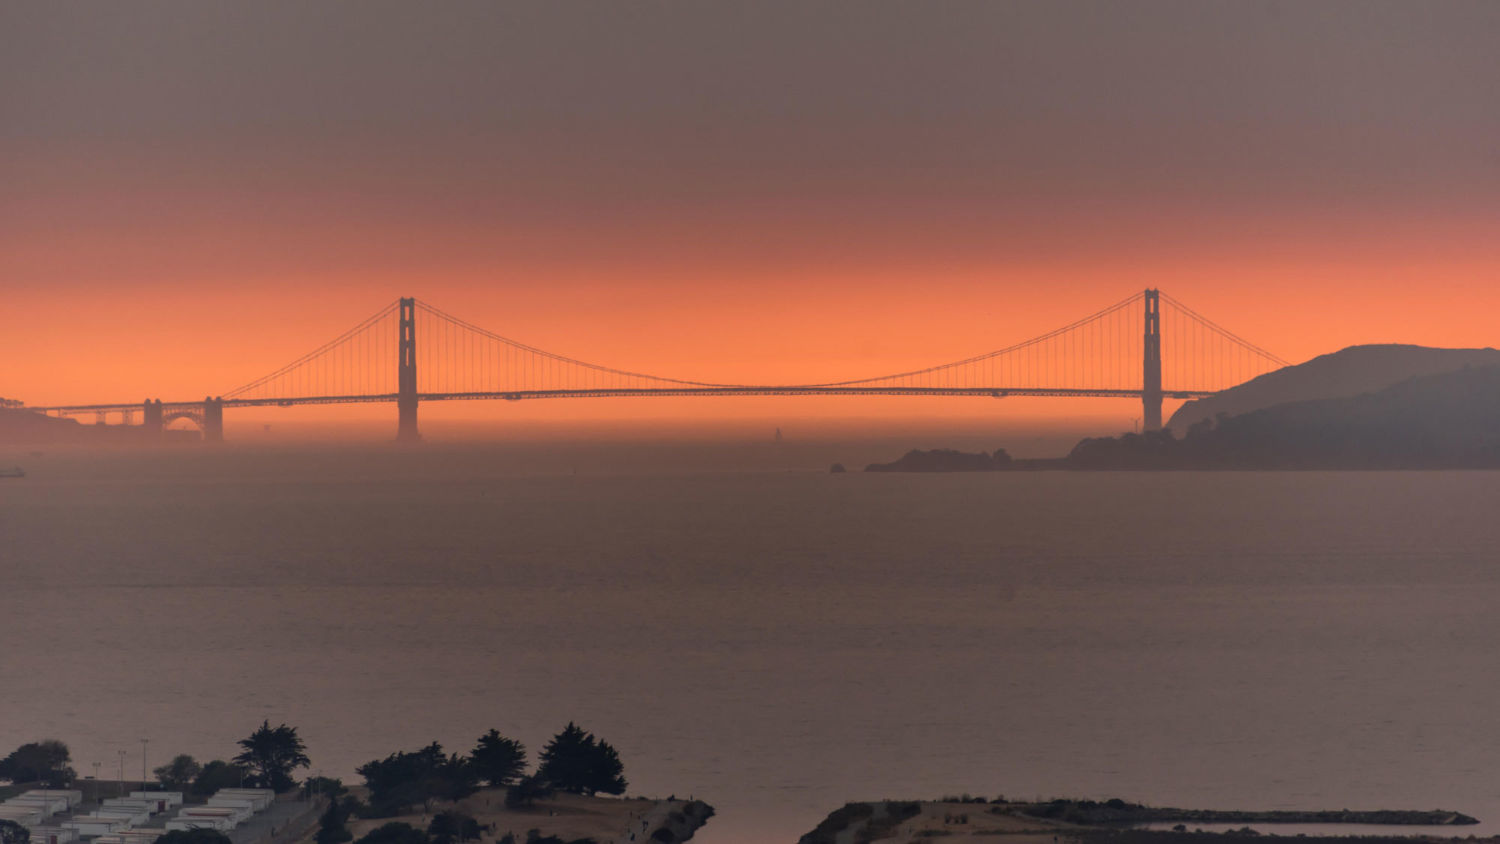 Smoke from wildfires creates an orange haze behind the Golden Gate Bridge in San Francisco.